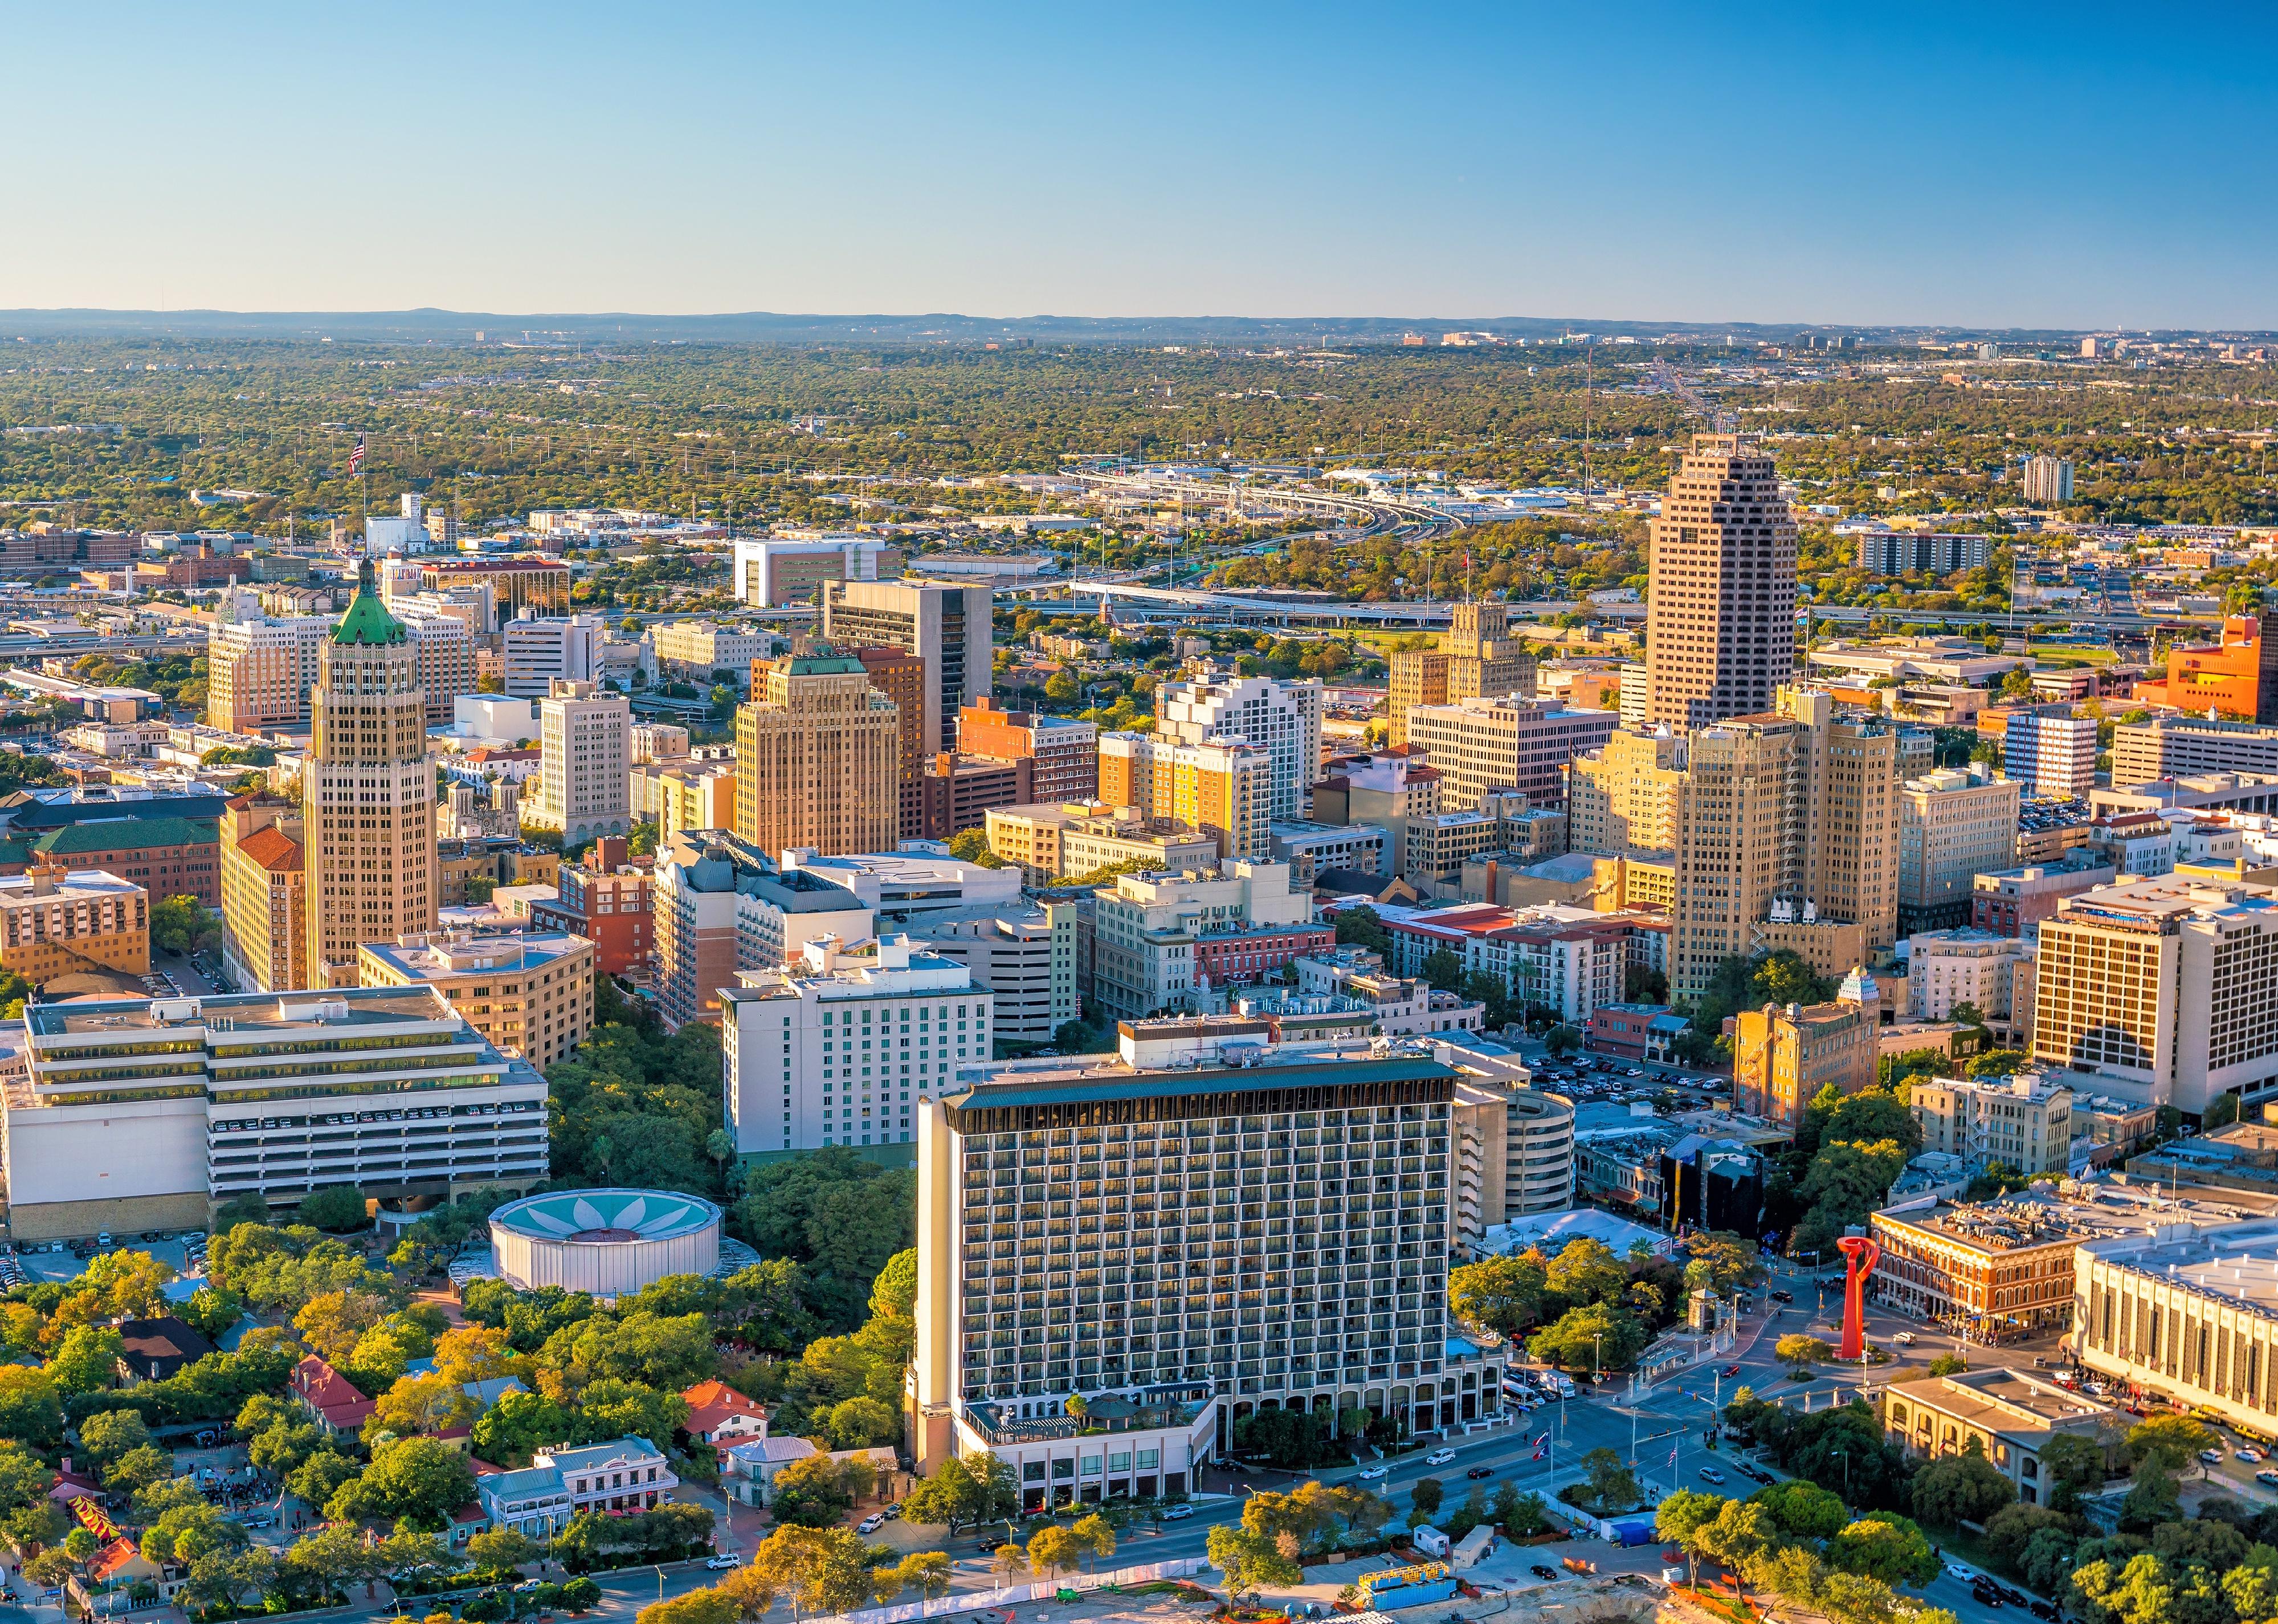 Top view of downtown San Antonio.